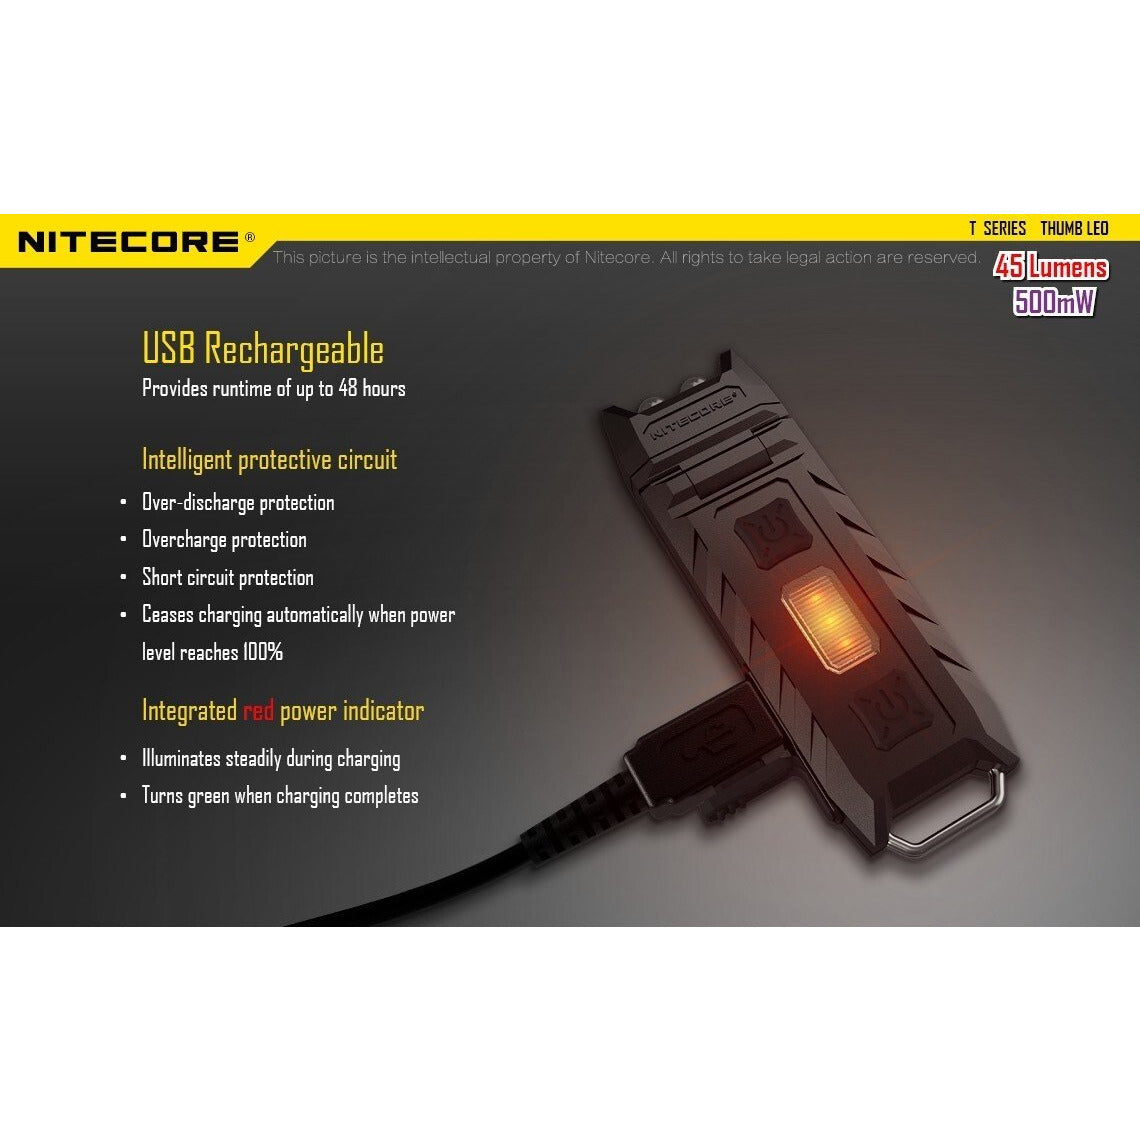 Nitecore Nitecore Rechargeable Compact Led Worklight Keychain Light - 45 Lumens W Key Ring #thumb Leo Dark Slate Gray